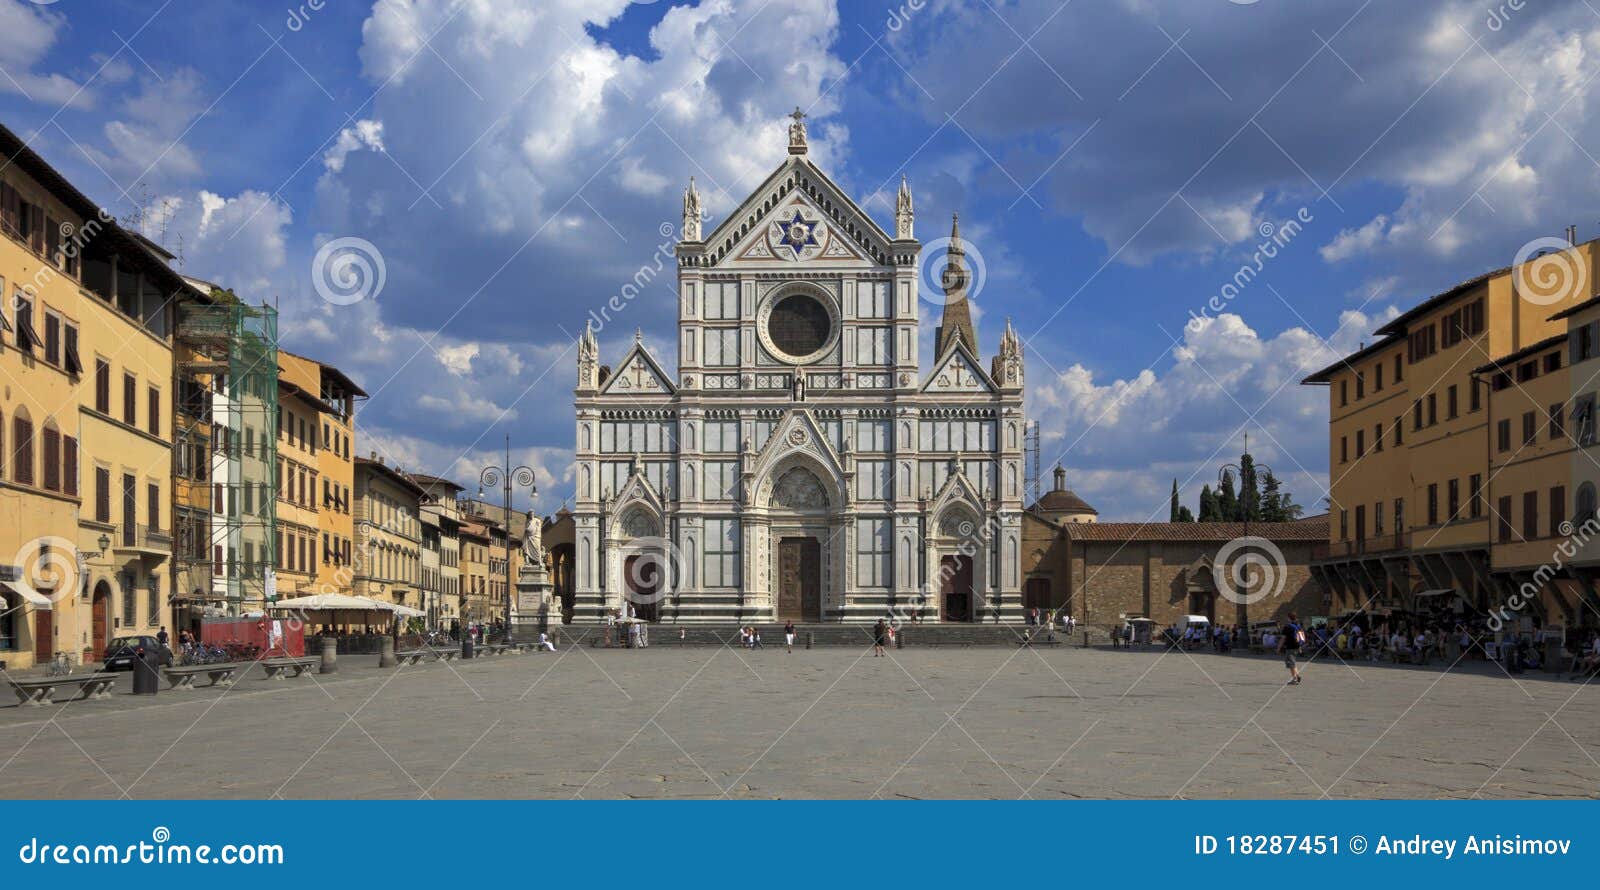 the basilica santa croce, florence, italy